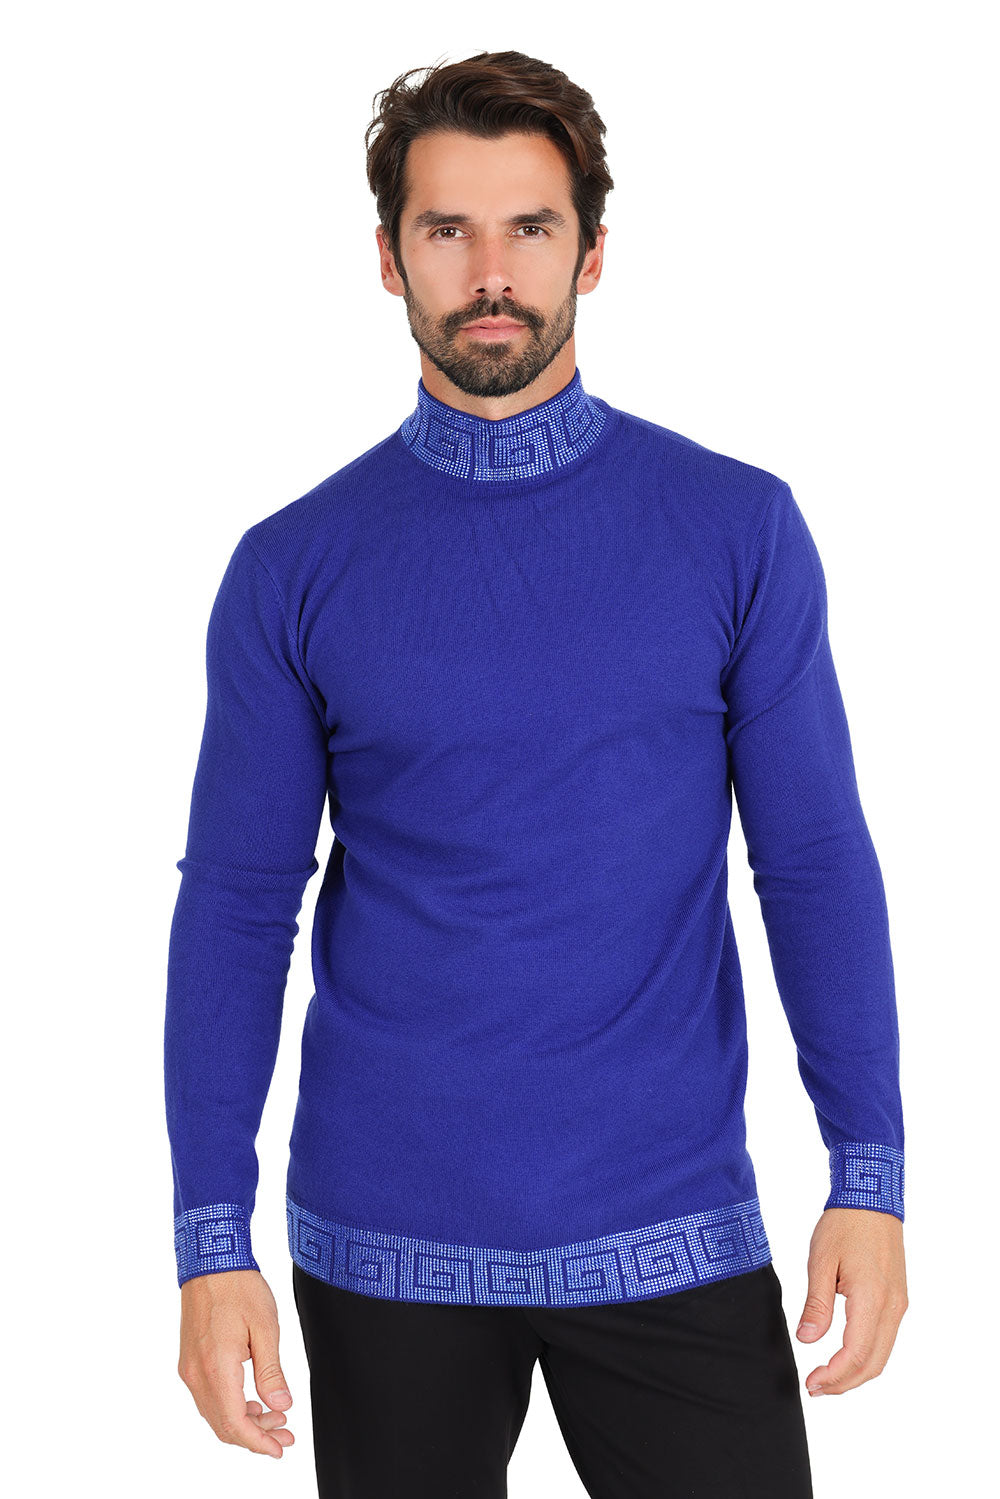 Barabas Men's Rhinestones Greek Key Pattern Turtleneck Sweater 2LS2106 Royal Black